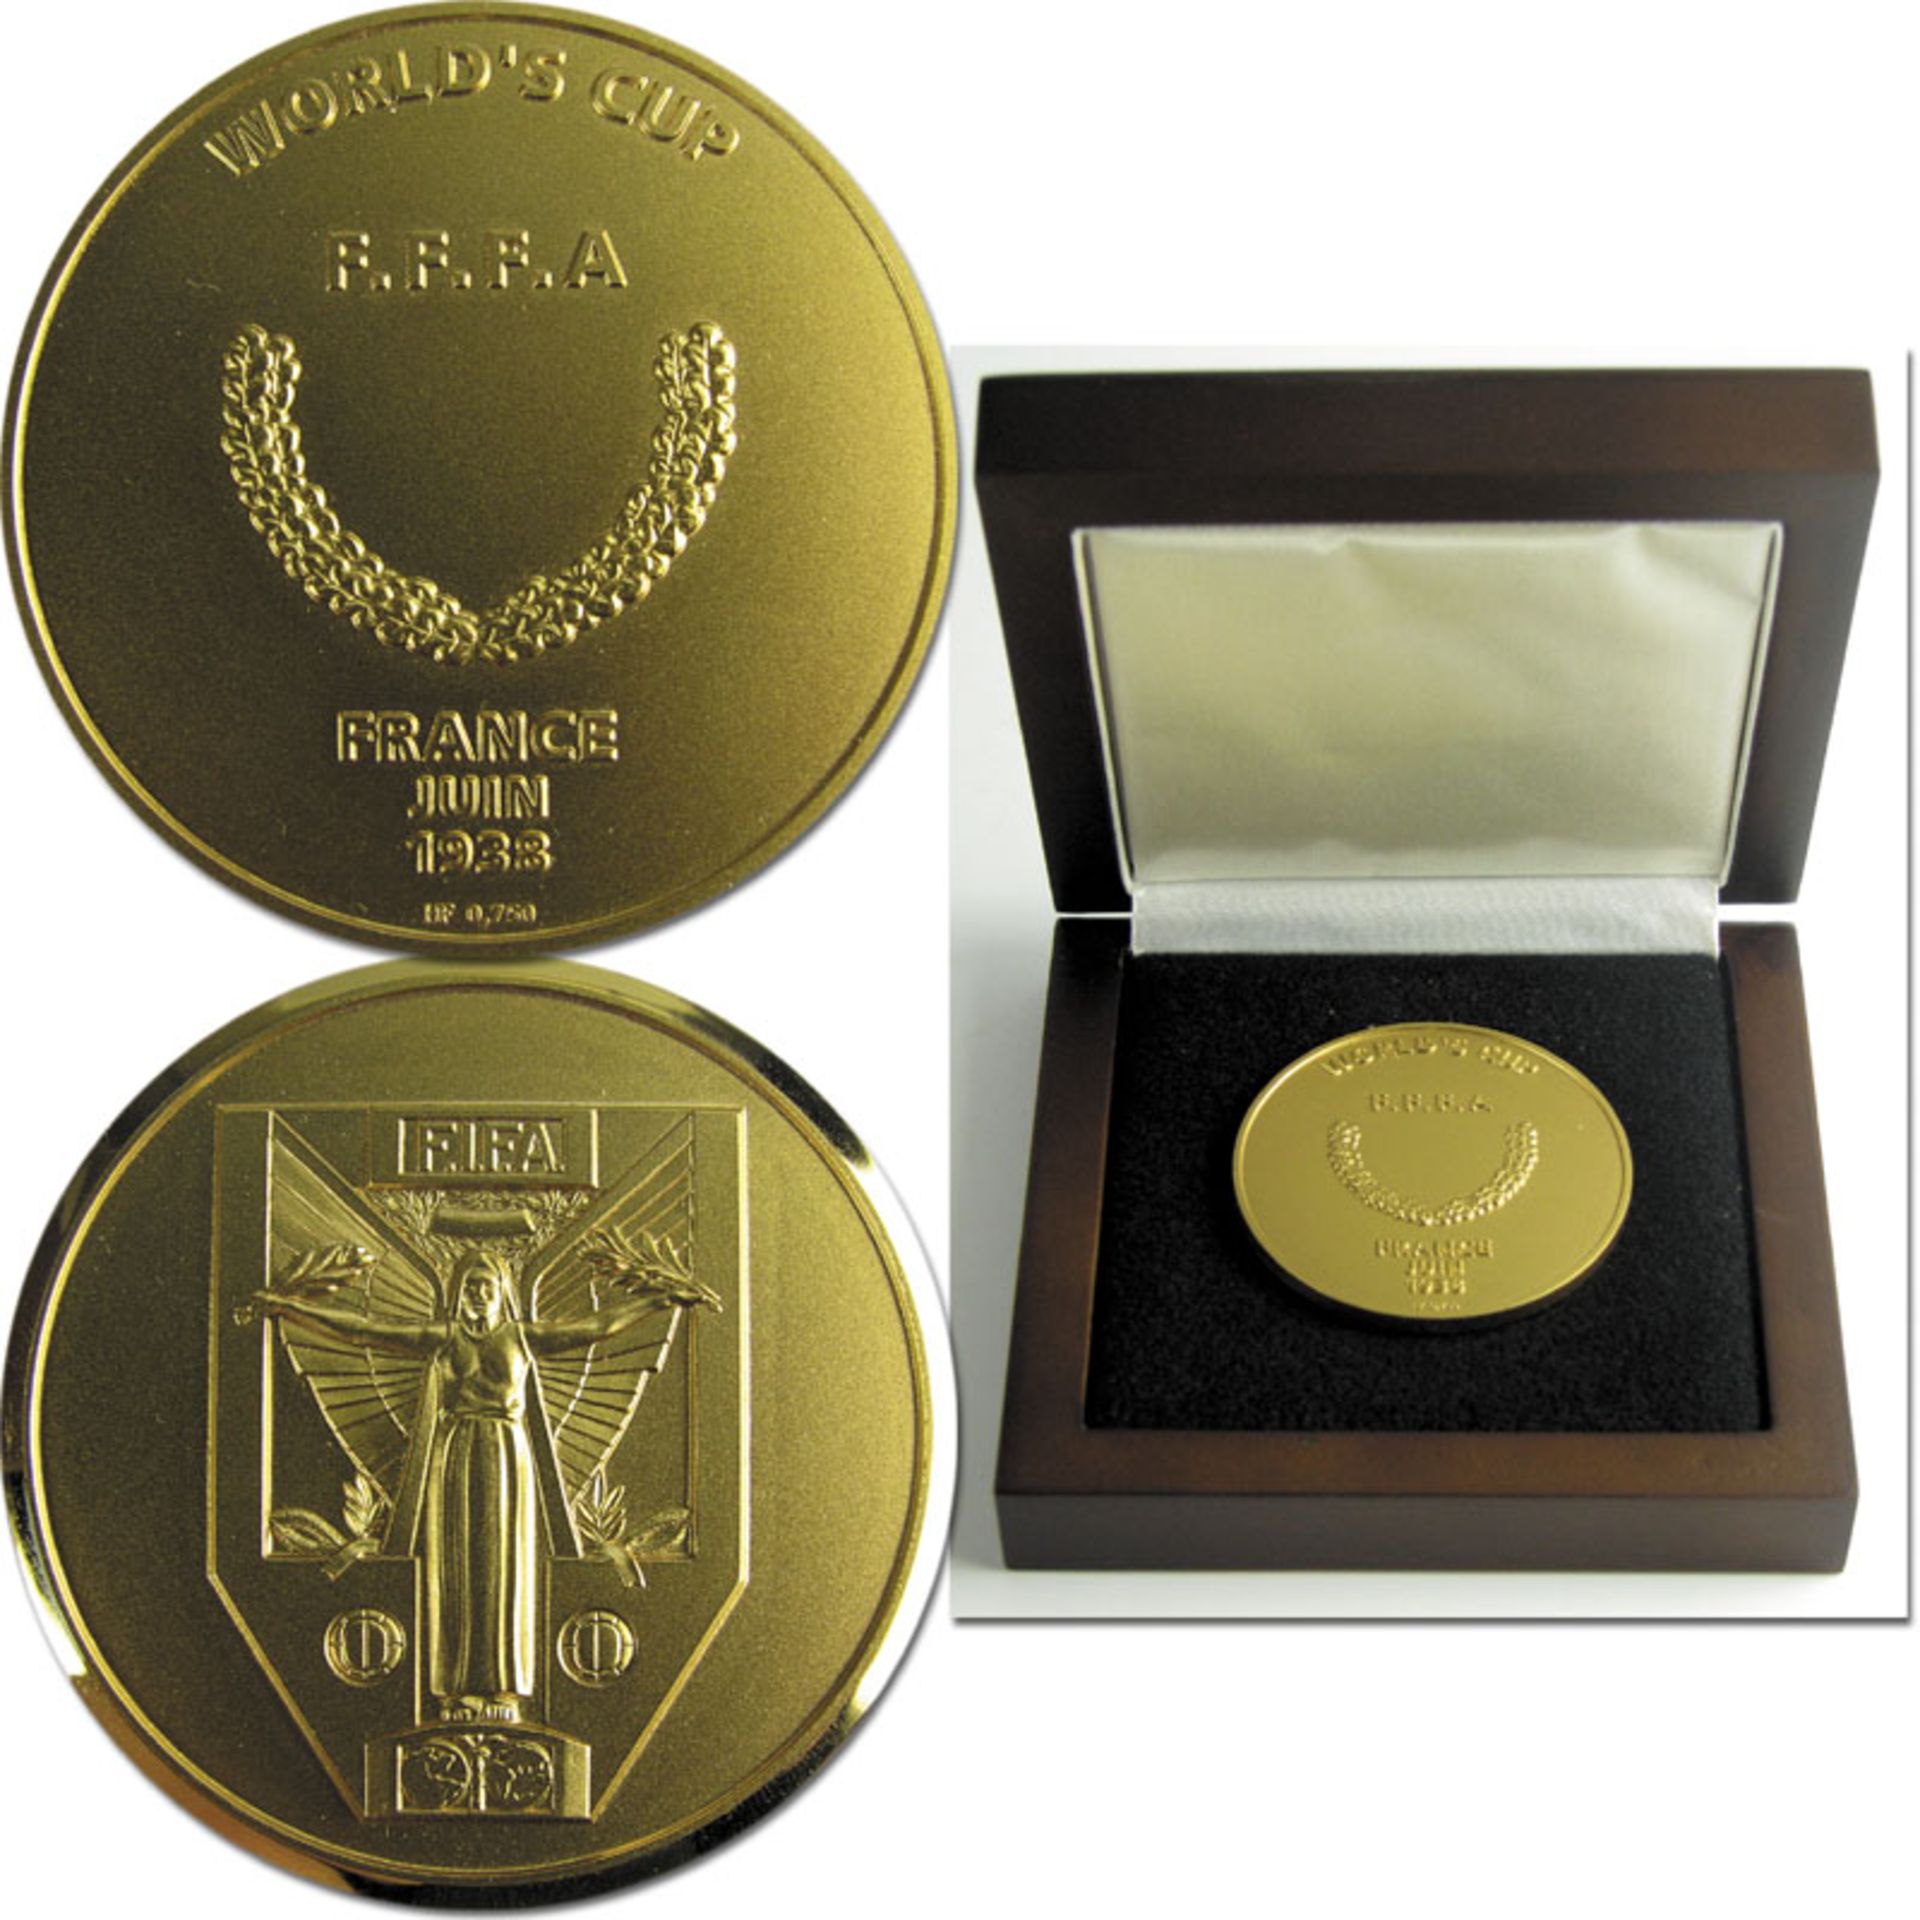 FIFA World Cup 1938 Gold Winner Medal - Winner medal for the 1938 World Cup in France for the world 